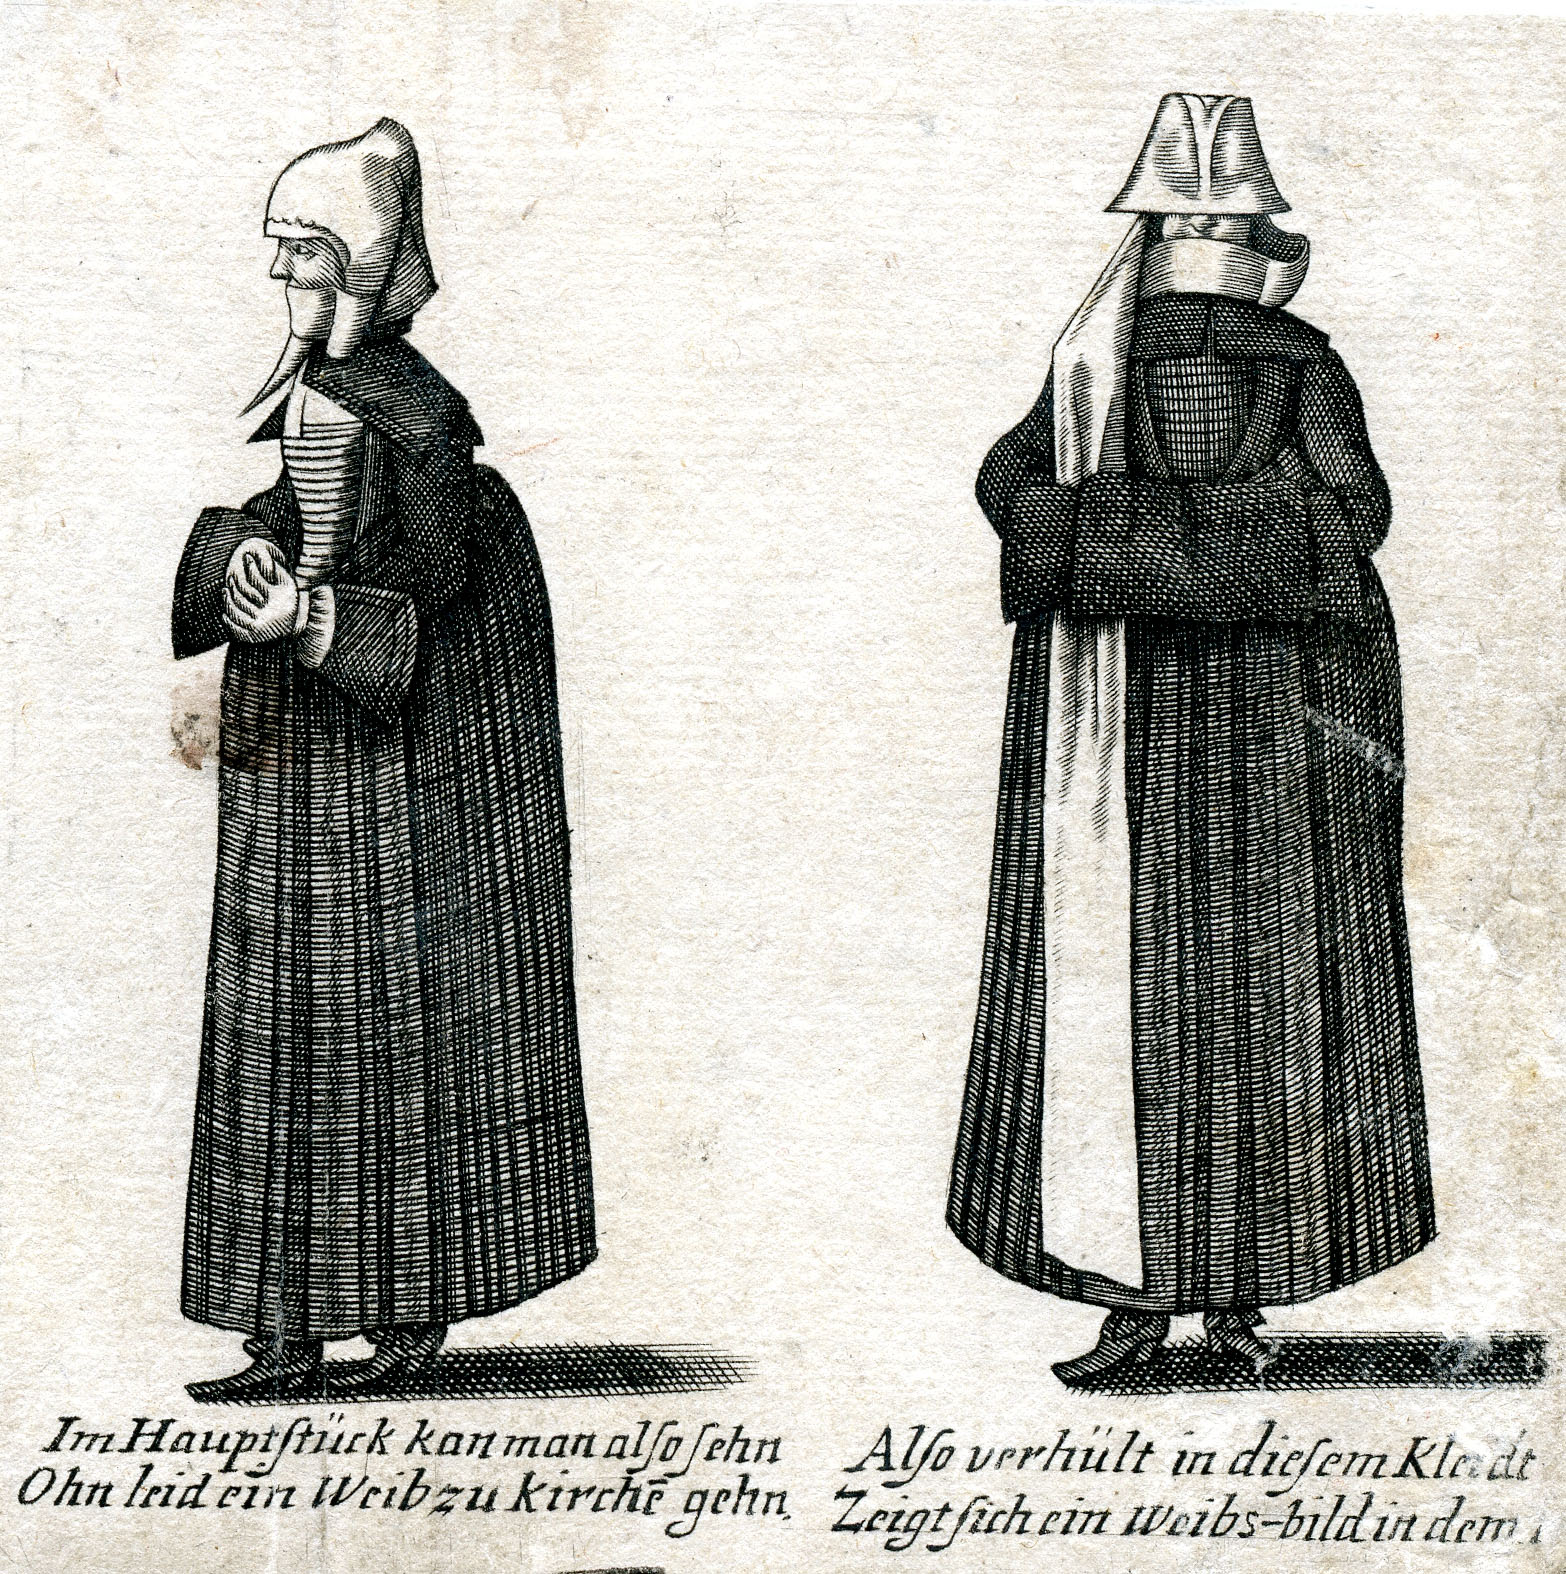 Illustration by Johann Jakob Ringle, Amictus, 17th century.